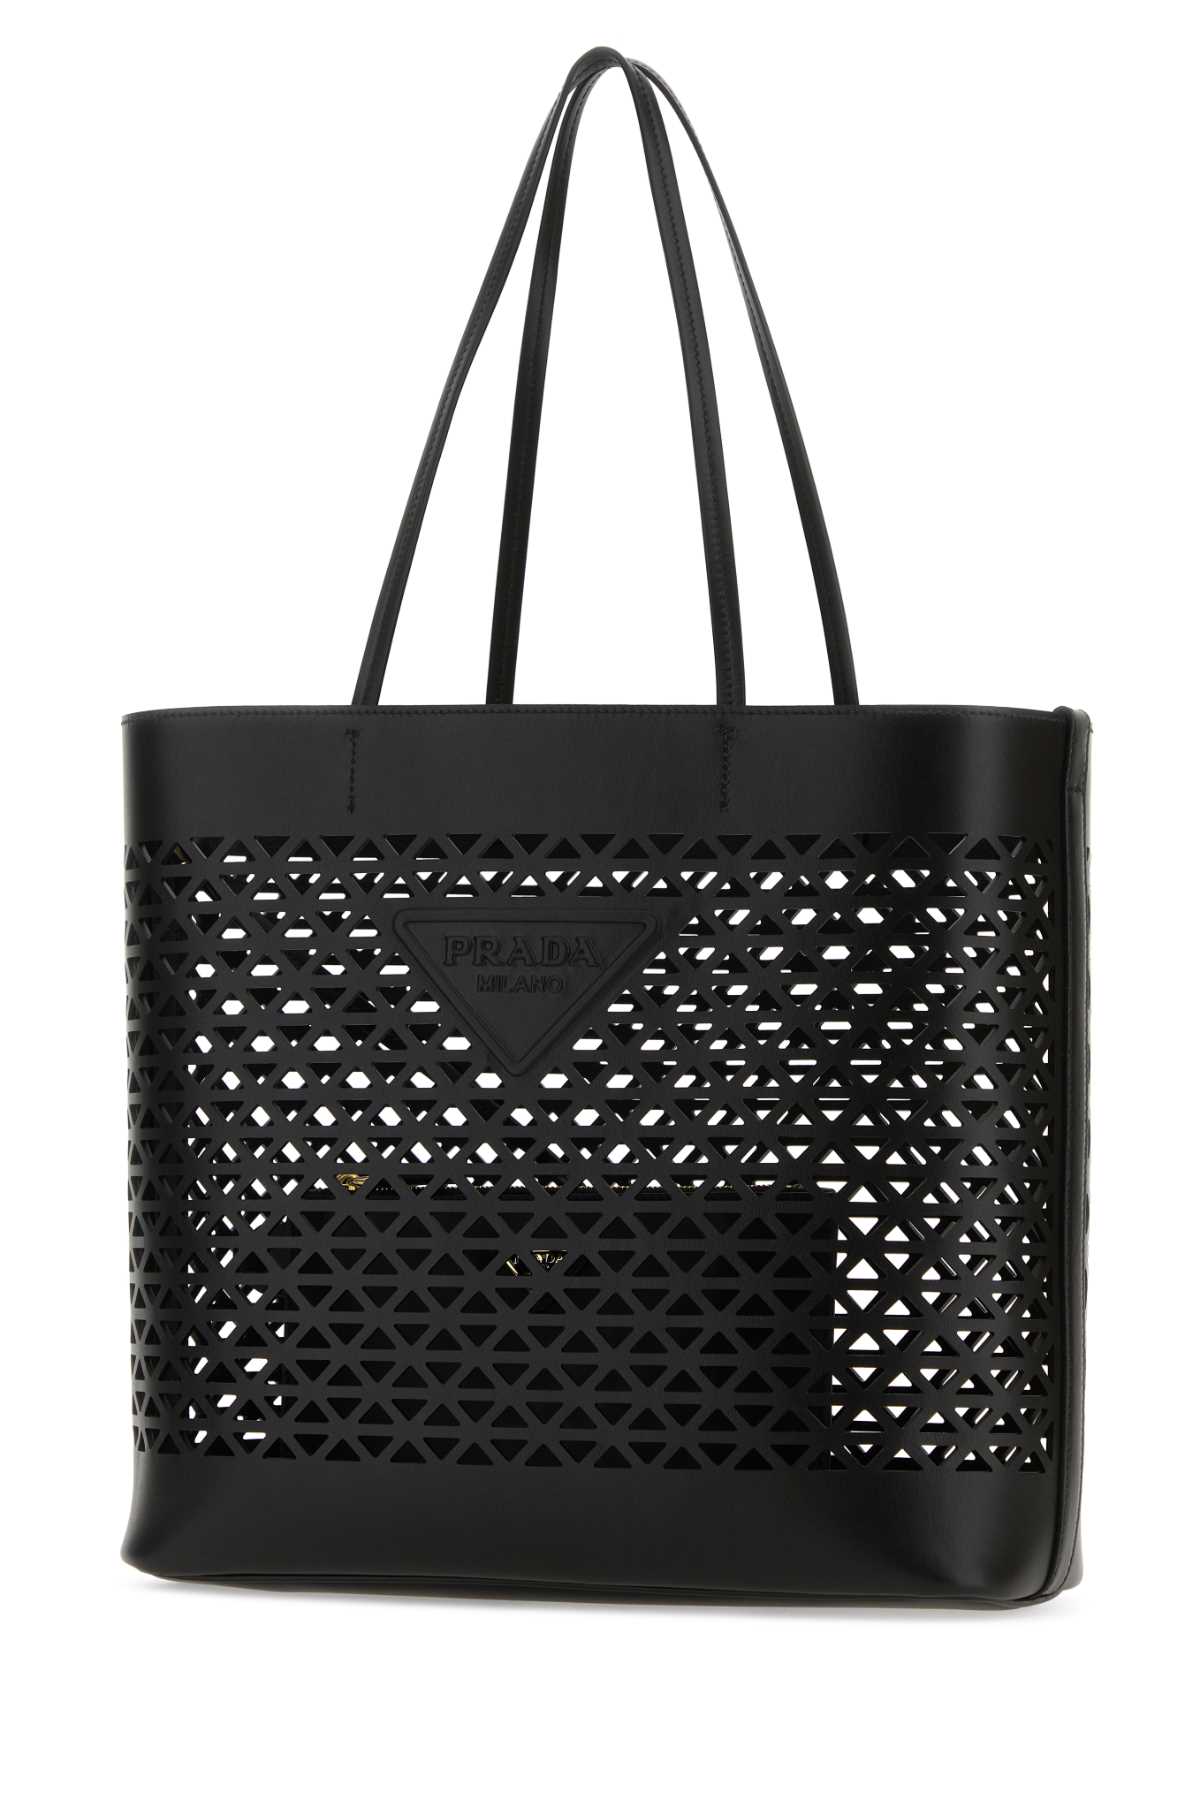 Prada Black Leather Shopping Bag In Nero